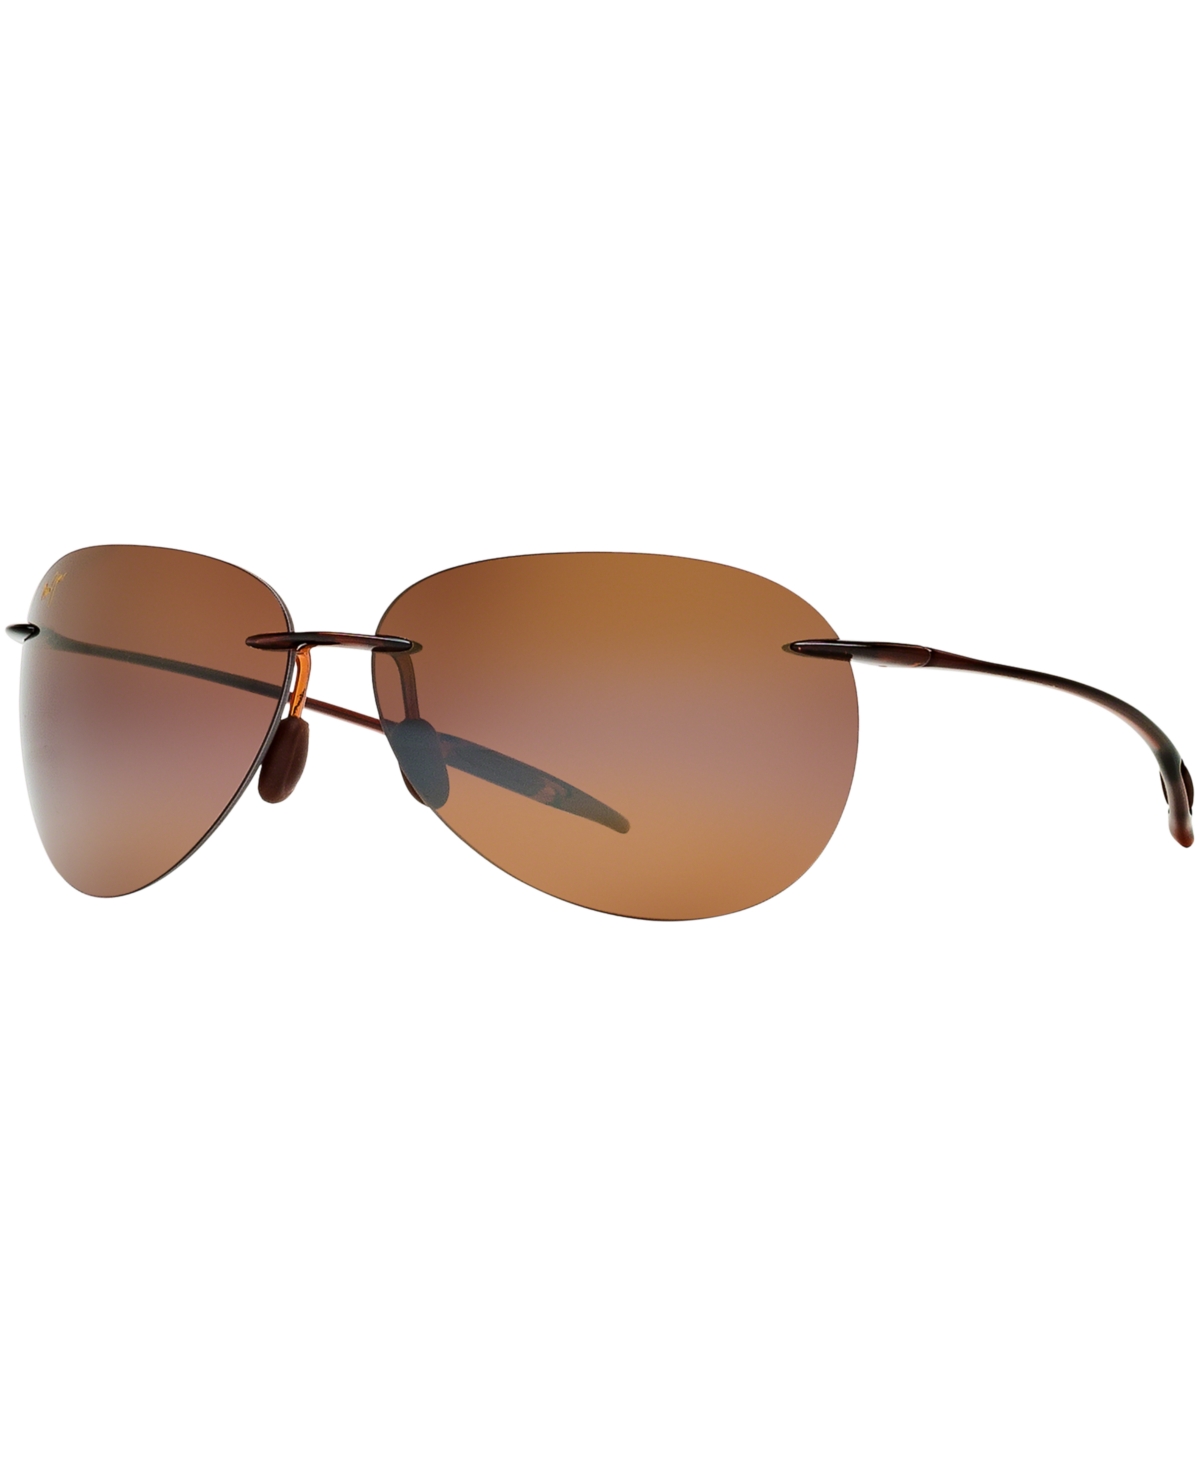 Polarized Sugar Beach Sunglasses, 421 - Brown/Bronze Mirror Polarized